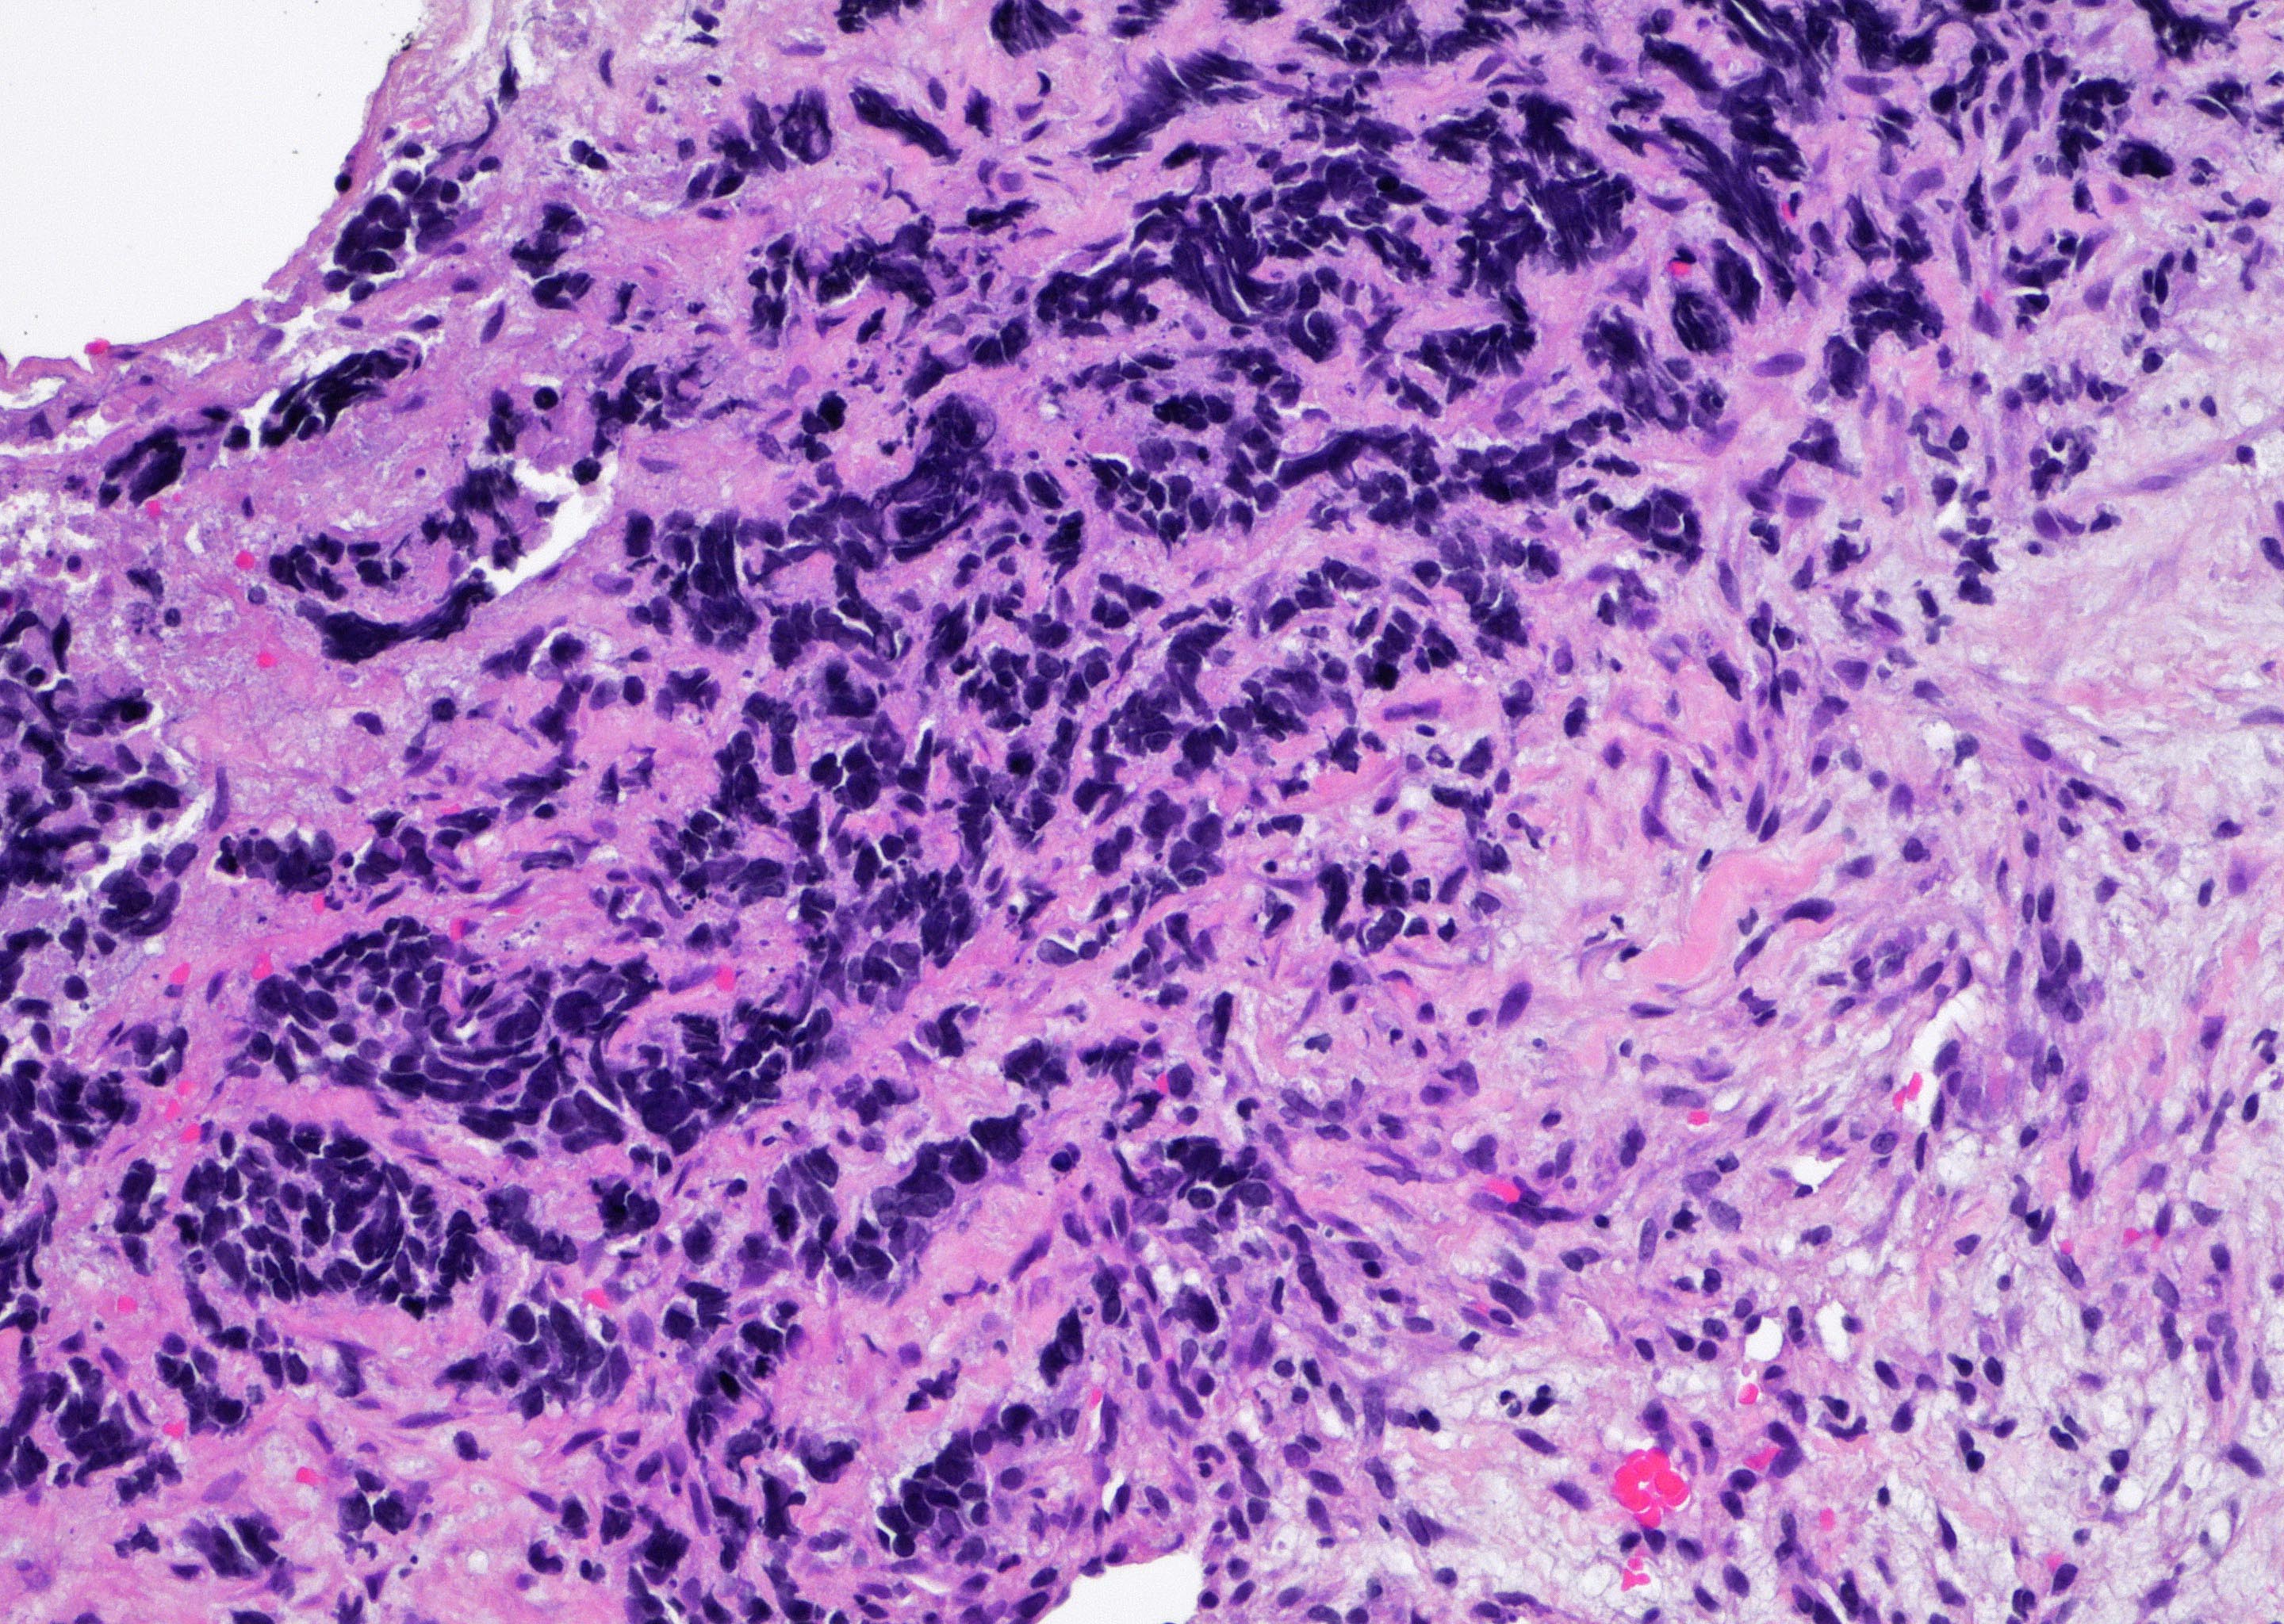 Liver small cell neuroendocrine carcinoma